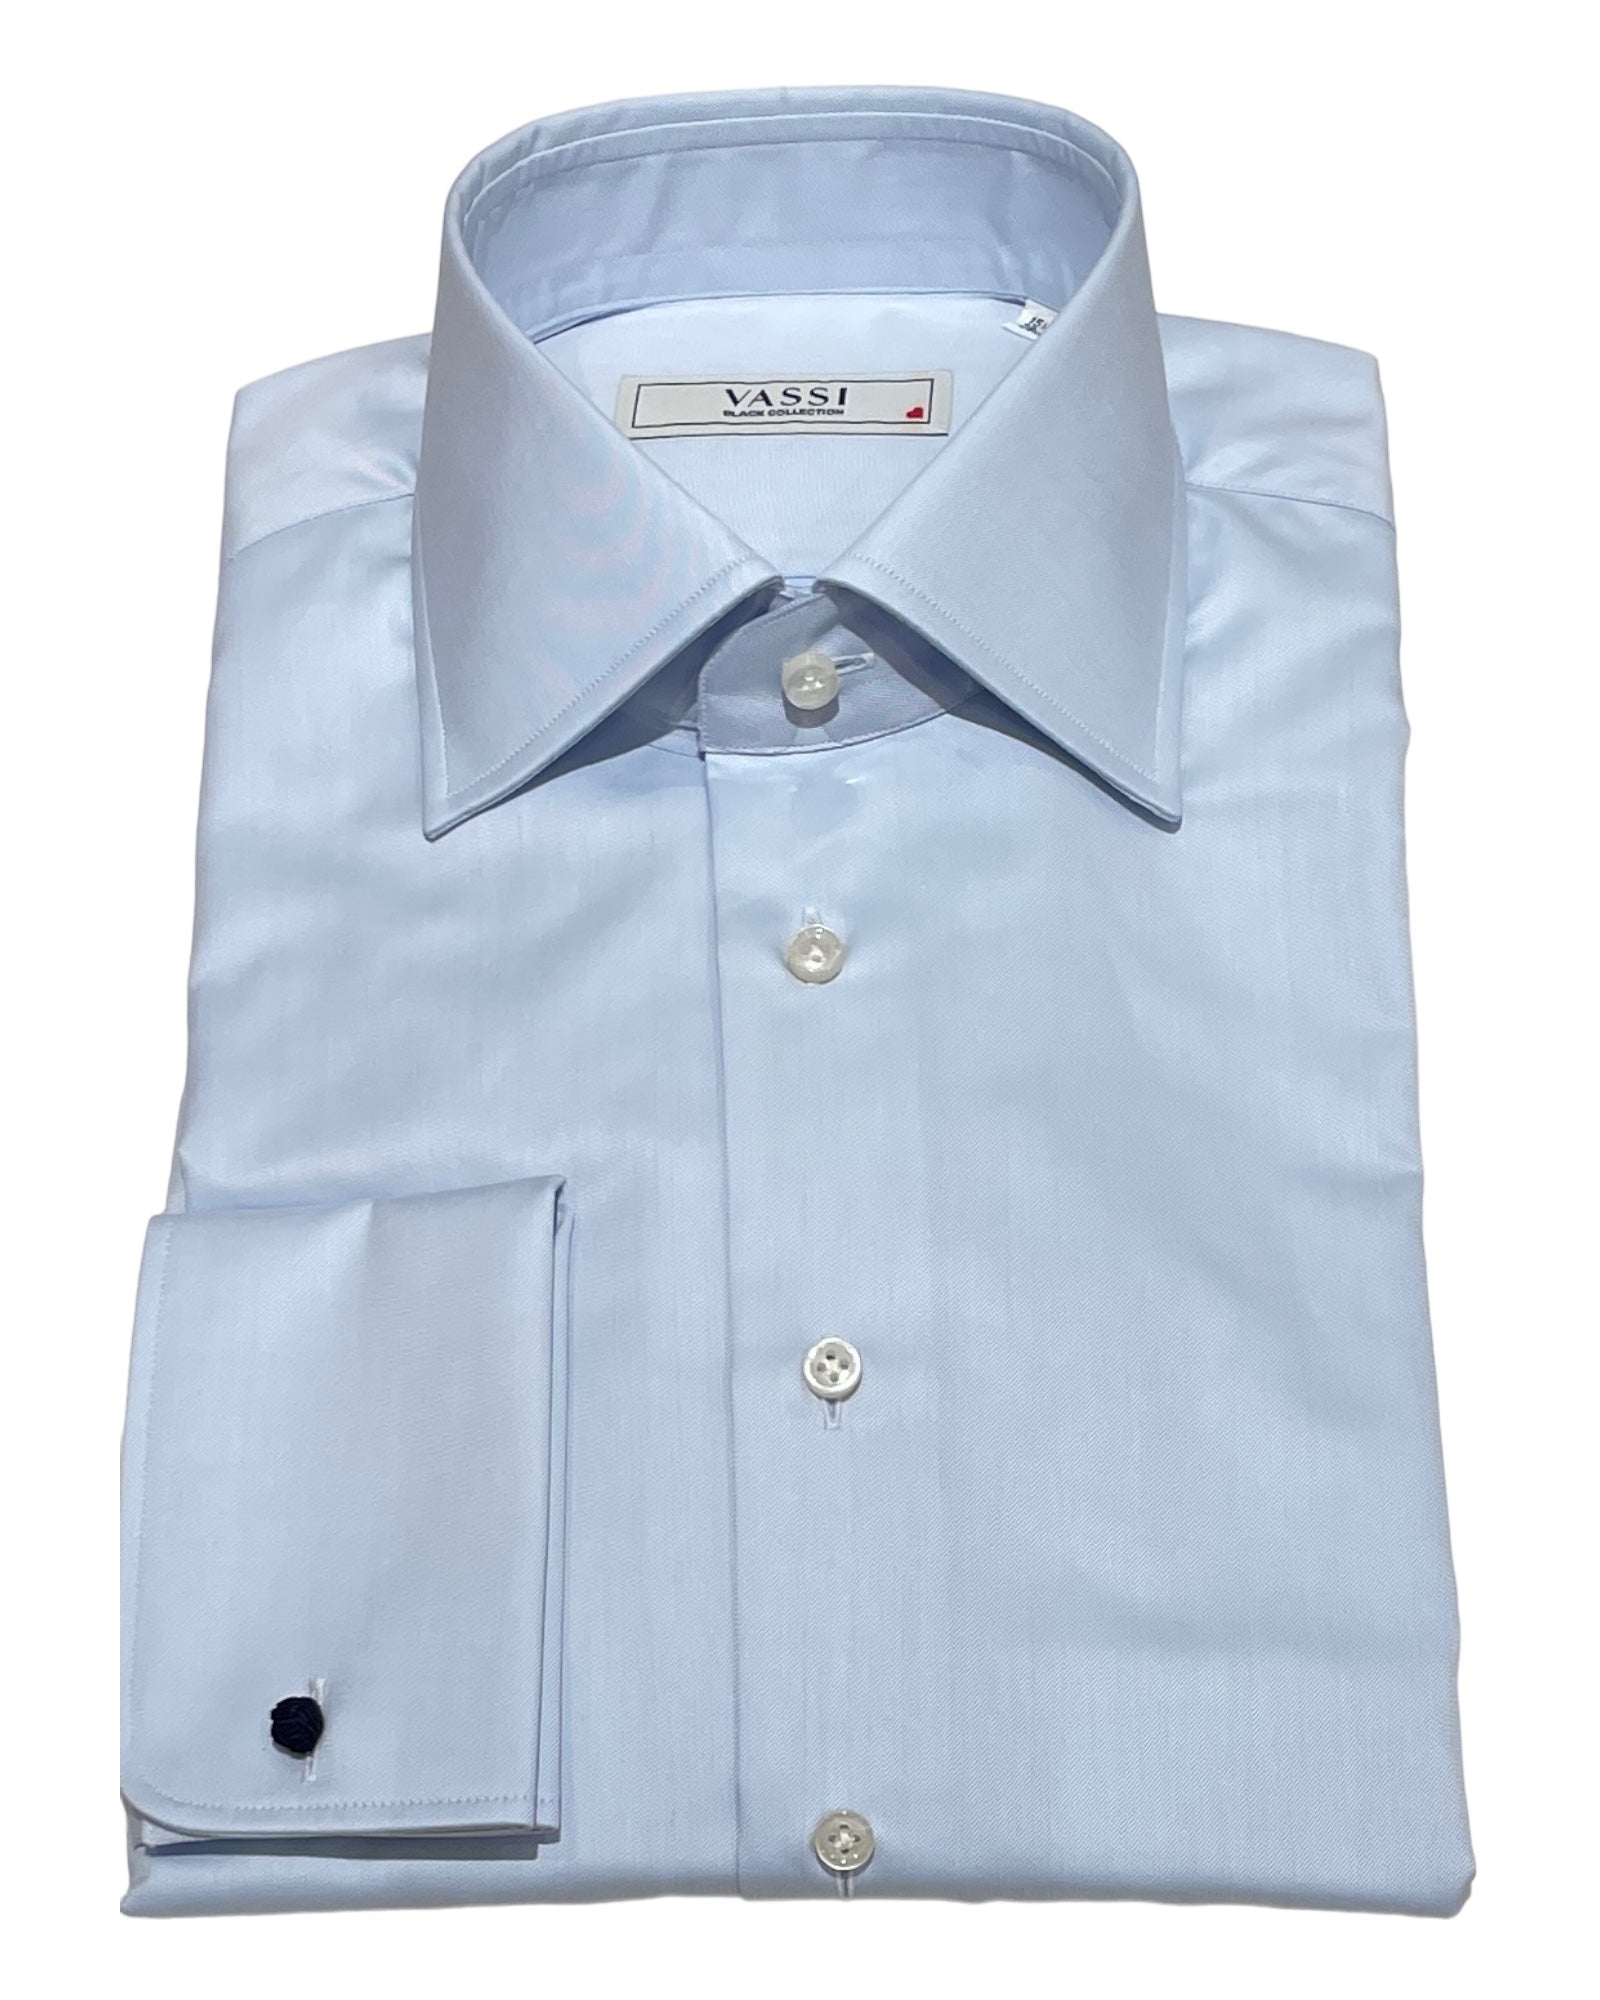 Essential Classic French Cuff Dress Shirt - Plain Blue